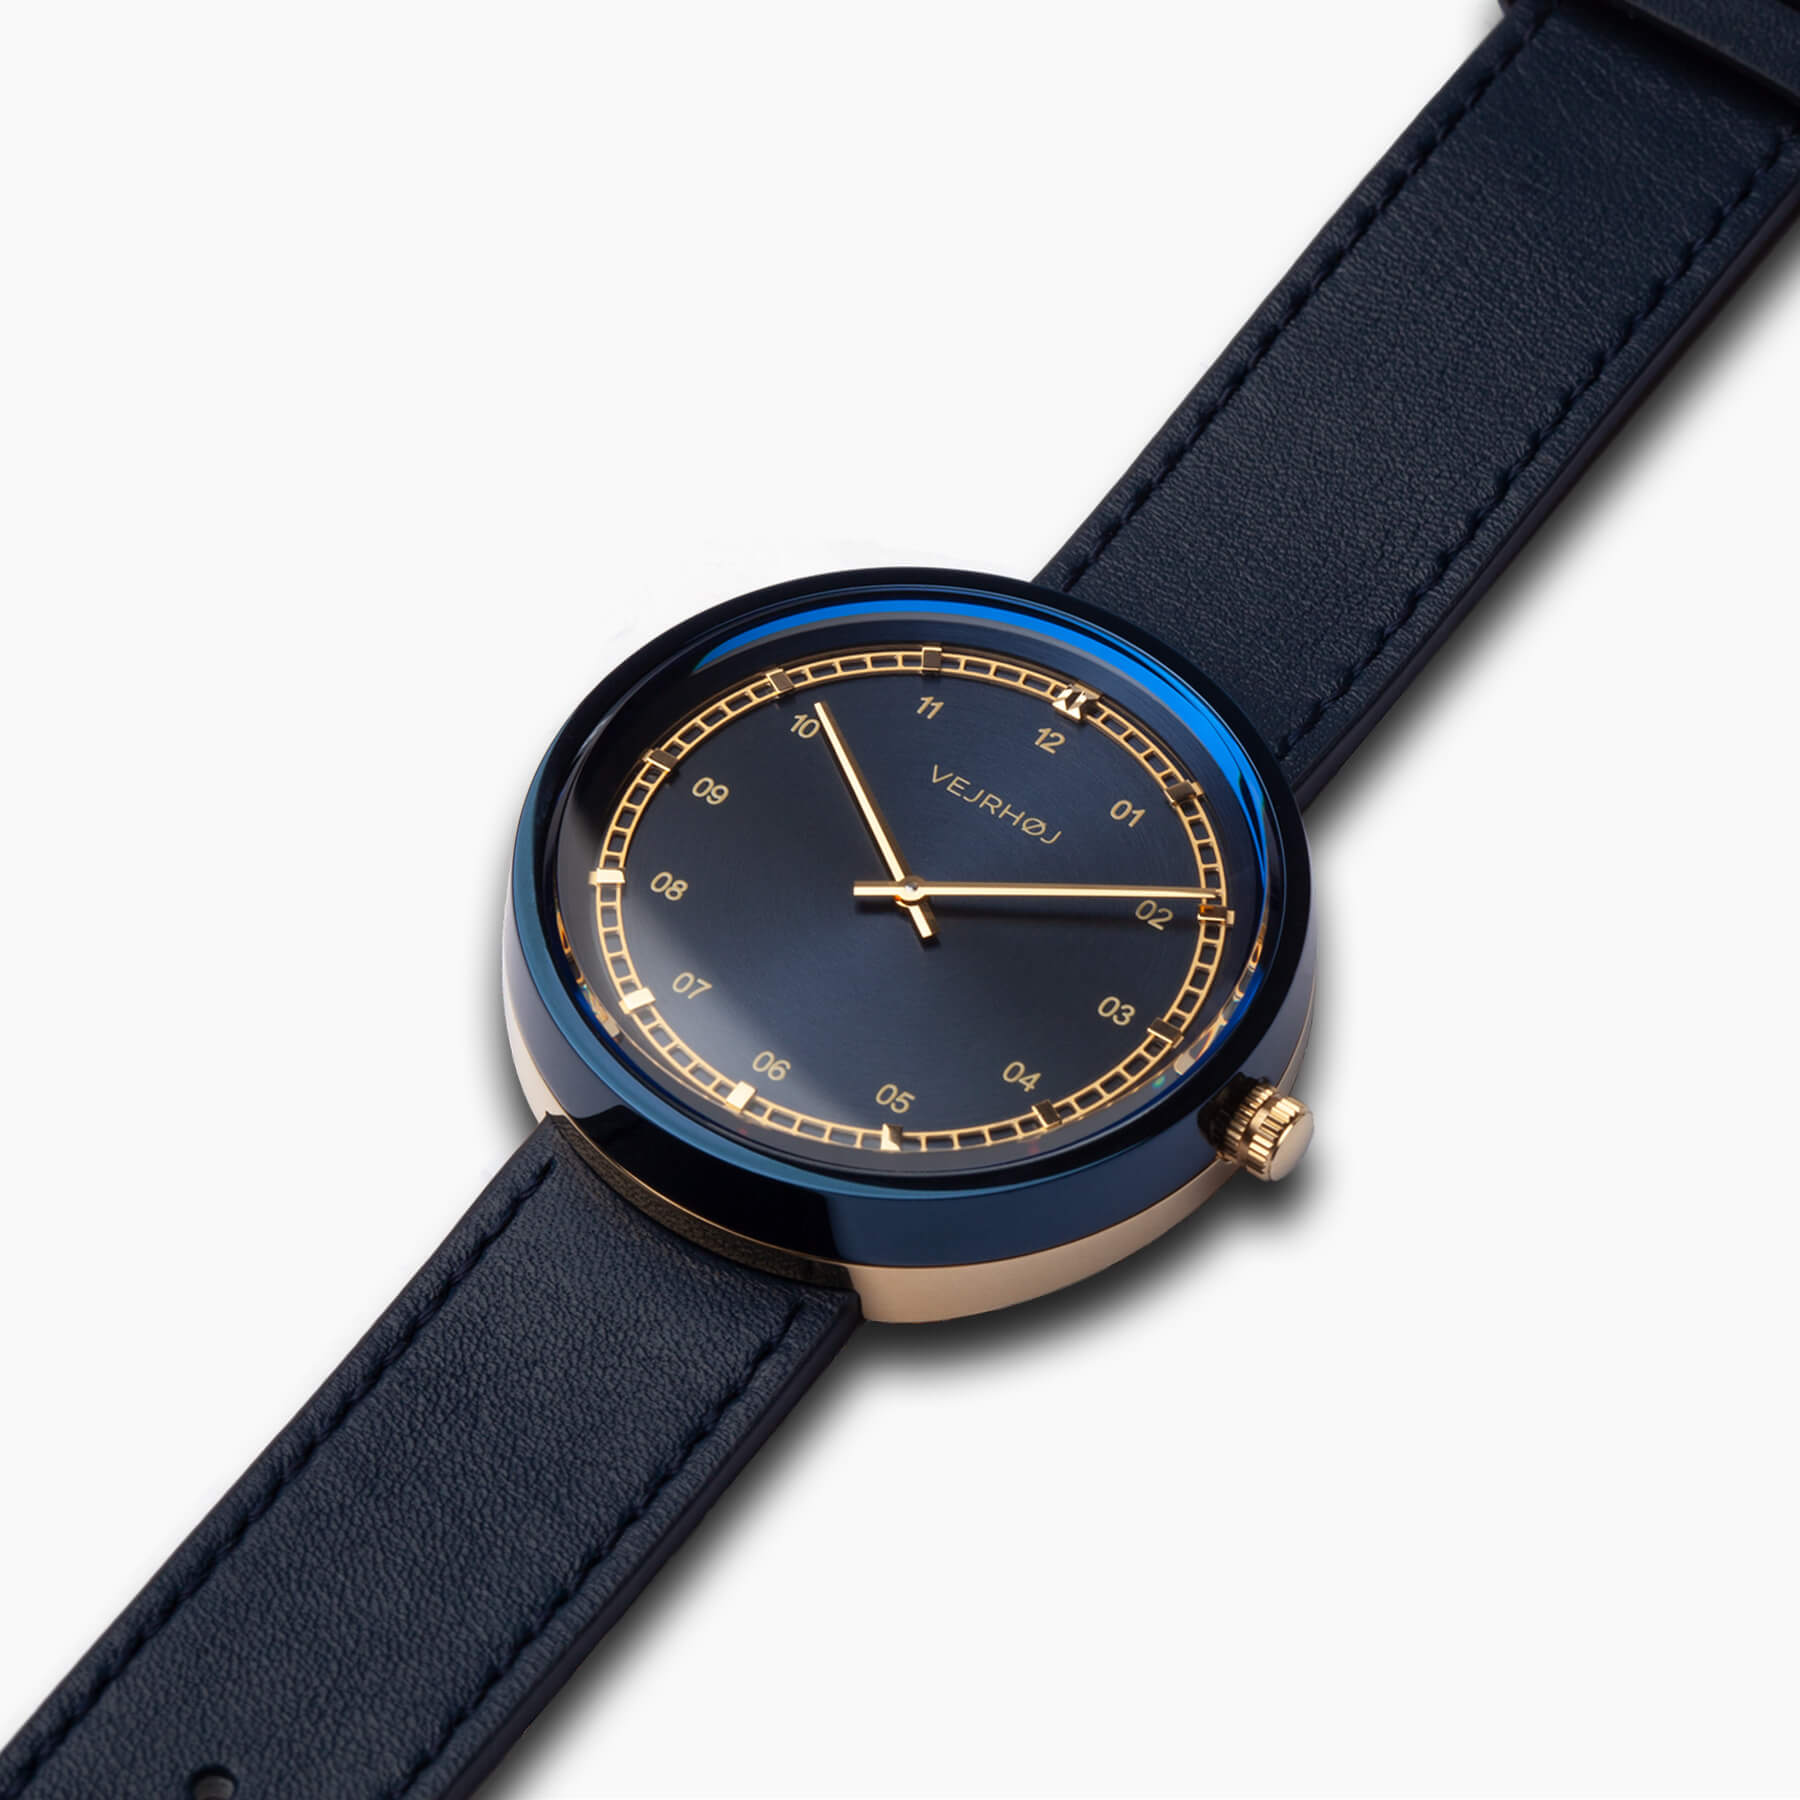 VEJRHØJ men's wooden watch with blue dial and golden hands